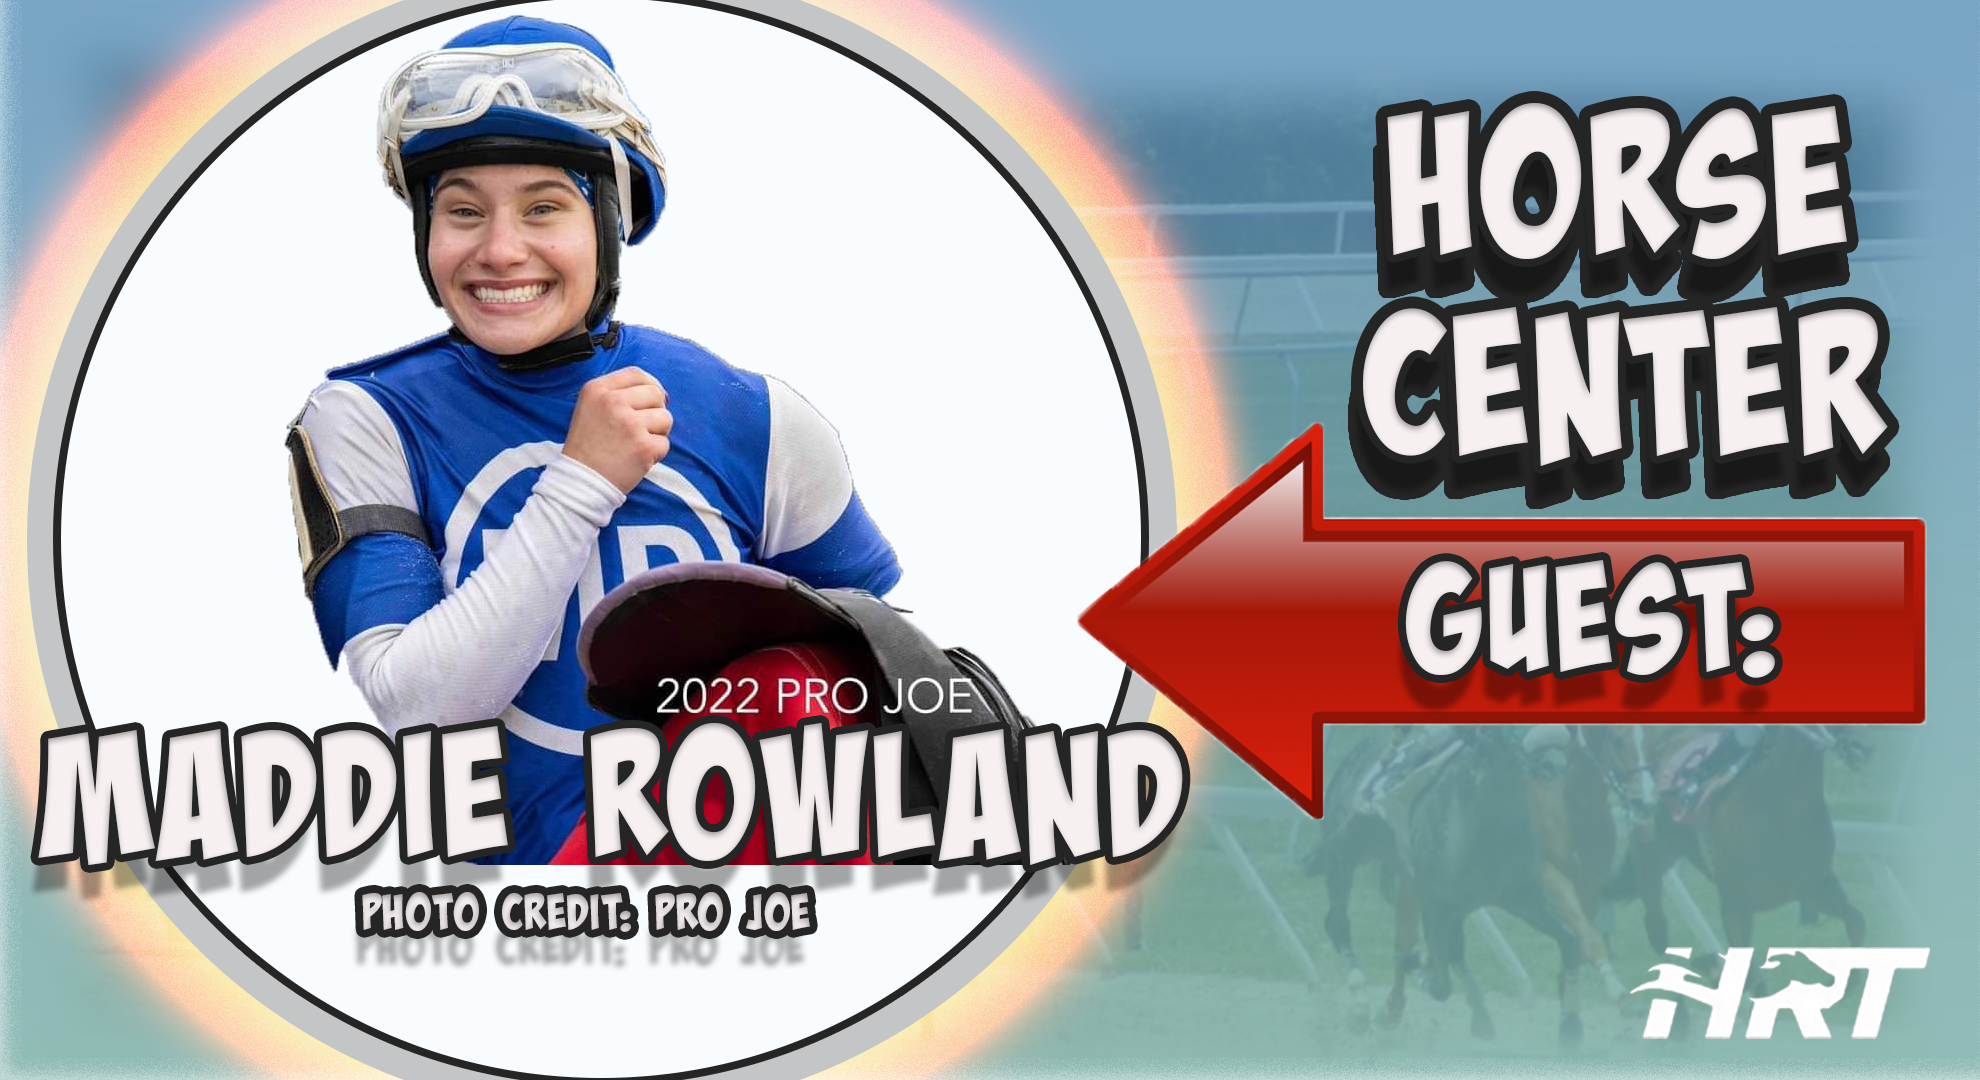 Jockey Madeline Rowland